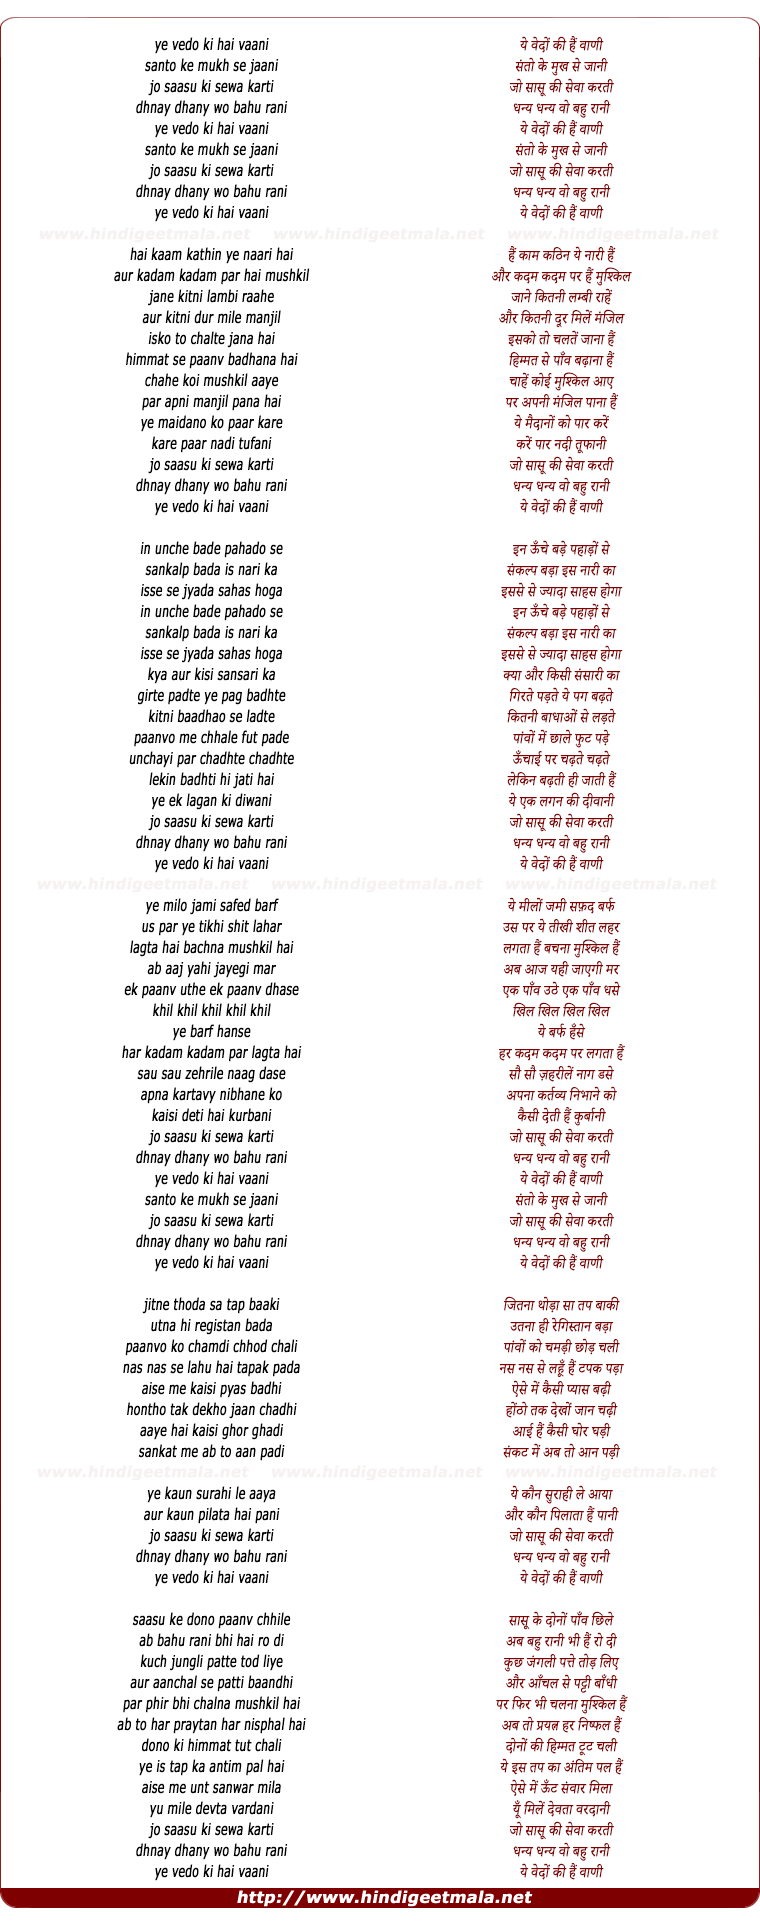 lyrics of song Ye Vedo Ki Hai Vaani